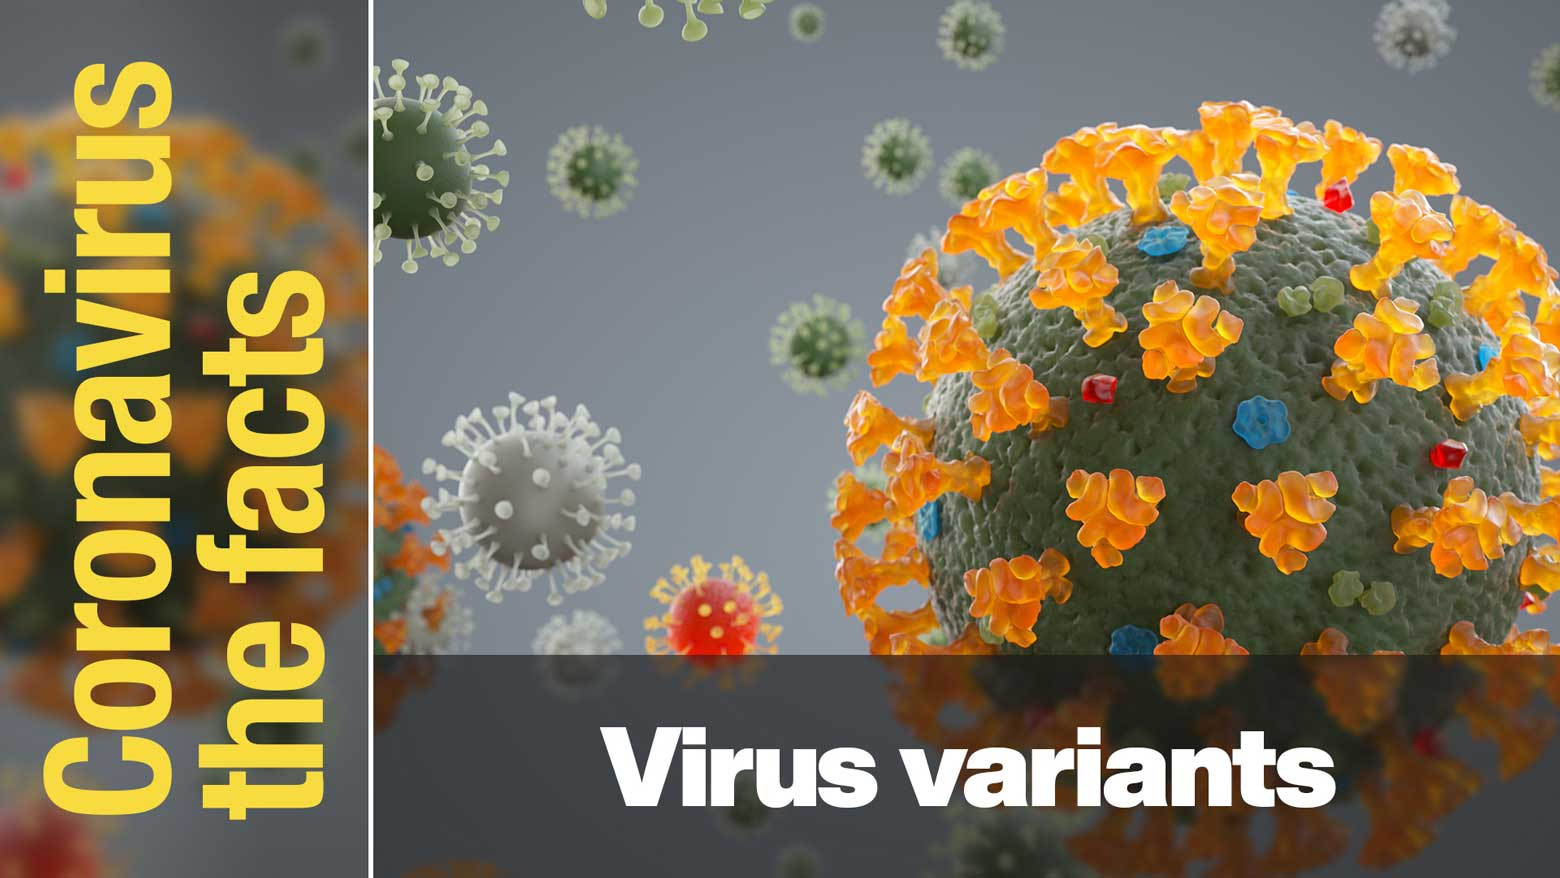 What are the characteristics of the coronavirus variants?